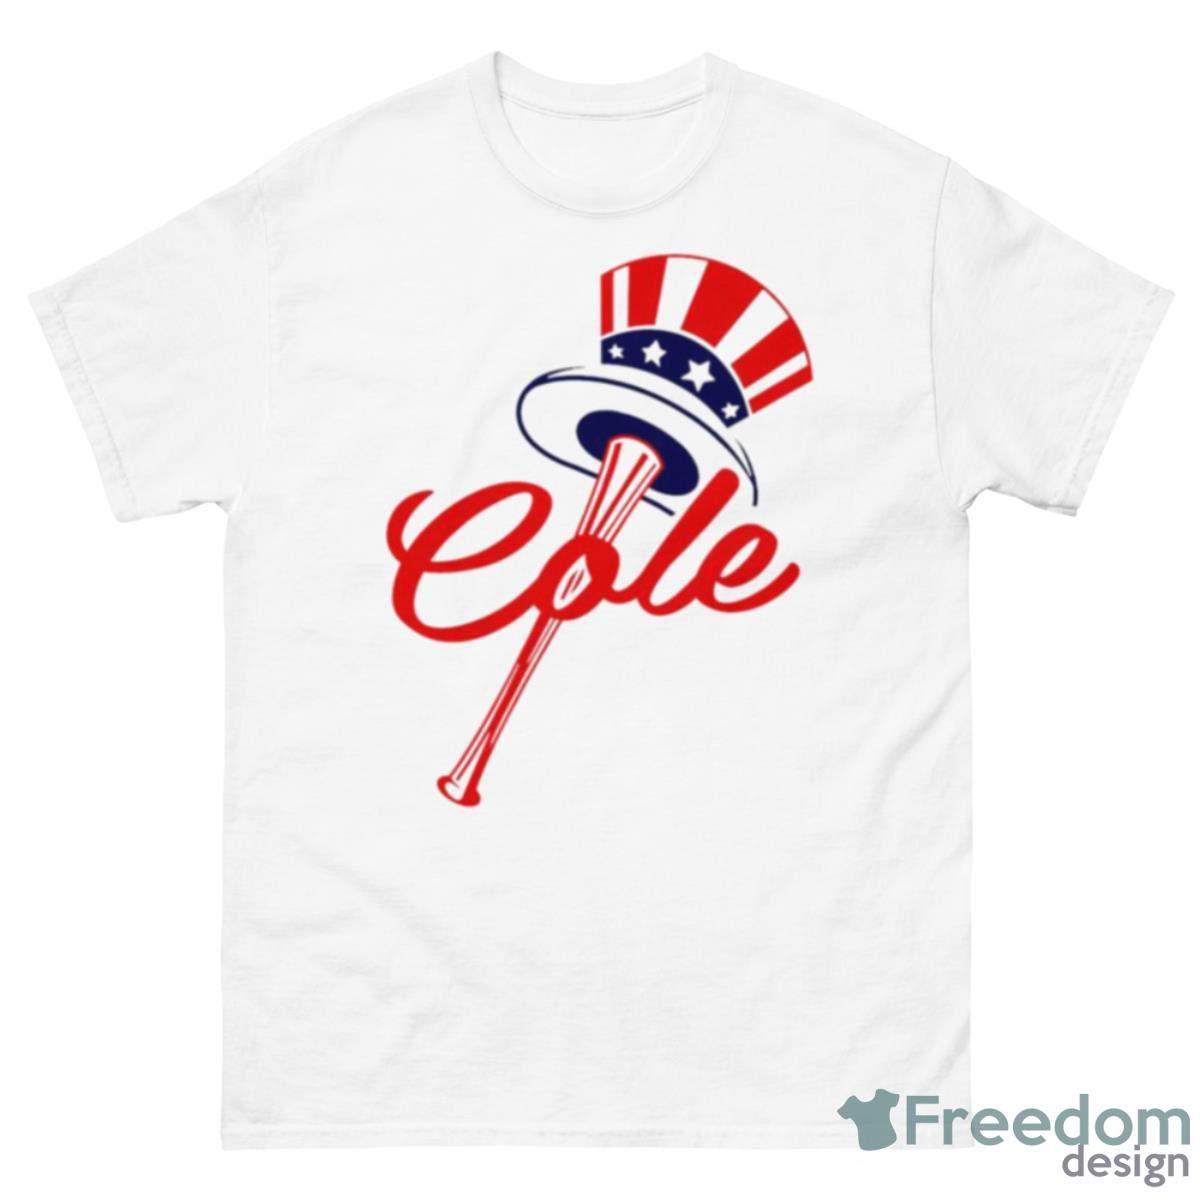 Cole Blooded New York Yankees Shirt - Freedomdesign